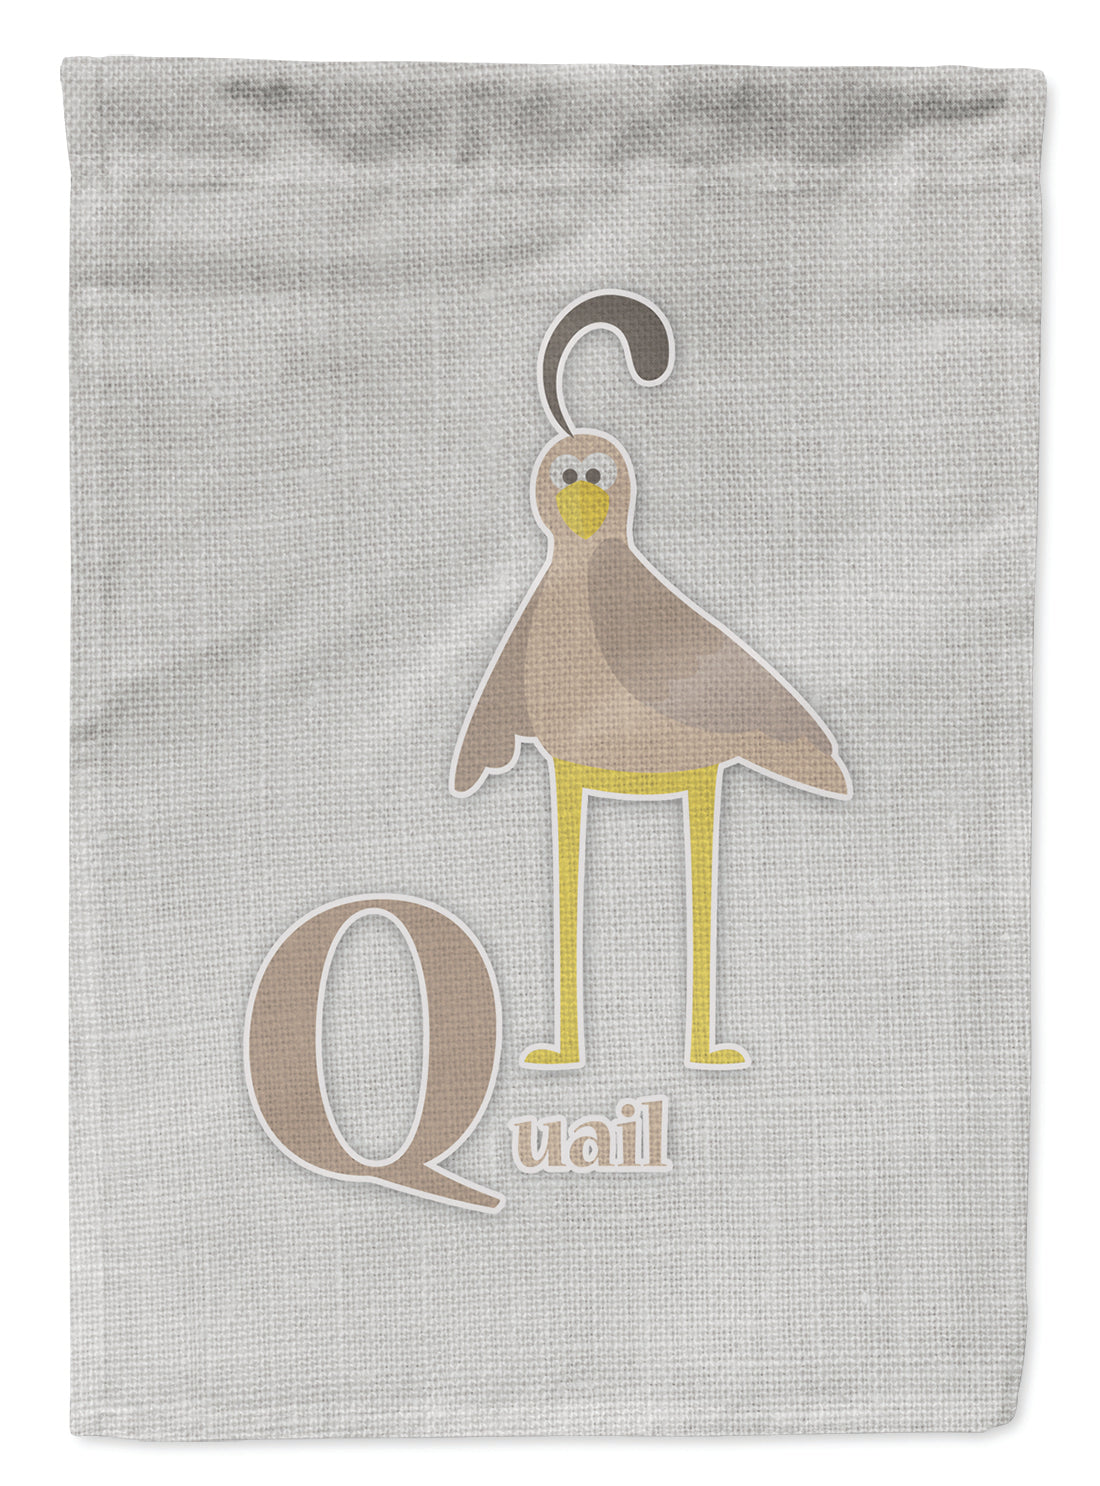 Alphabet Q for Quail Flag Garden Size BB5742GF